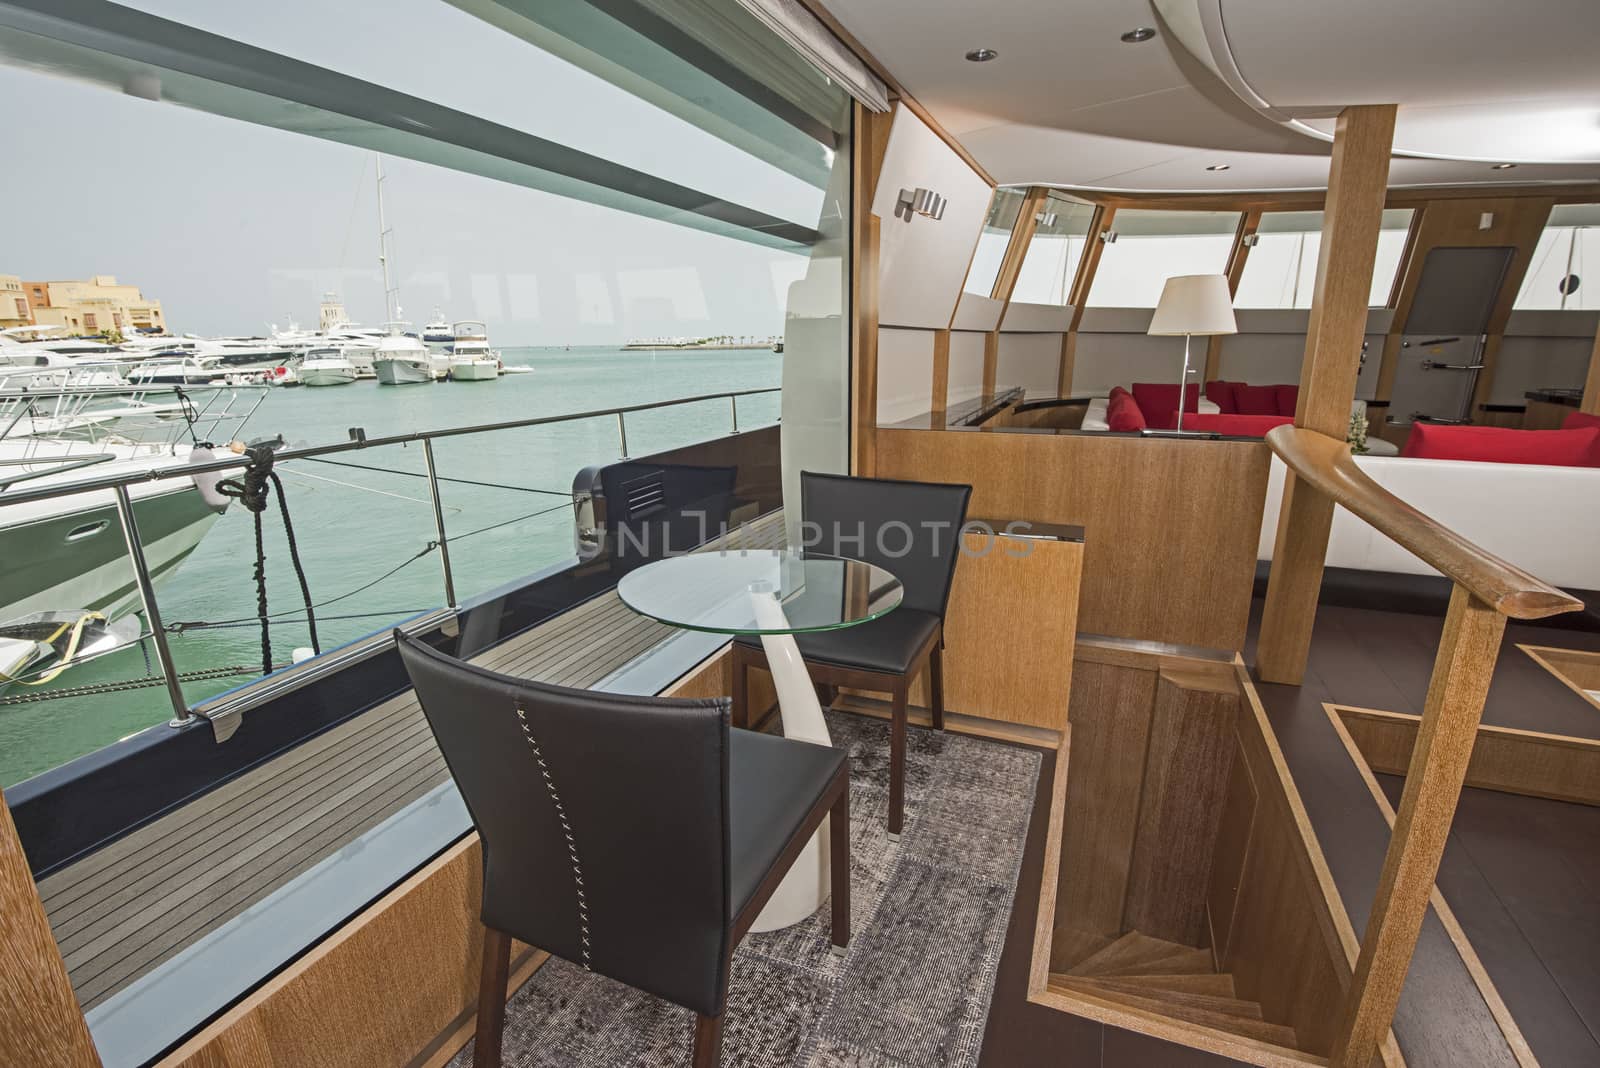 Seating in salon area of luxury motor yacht by paulvinten